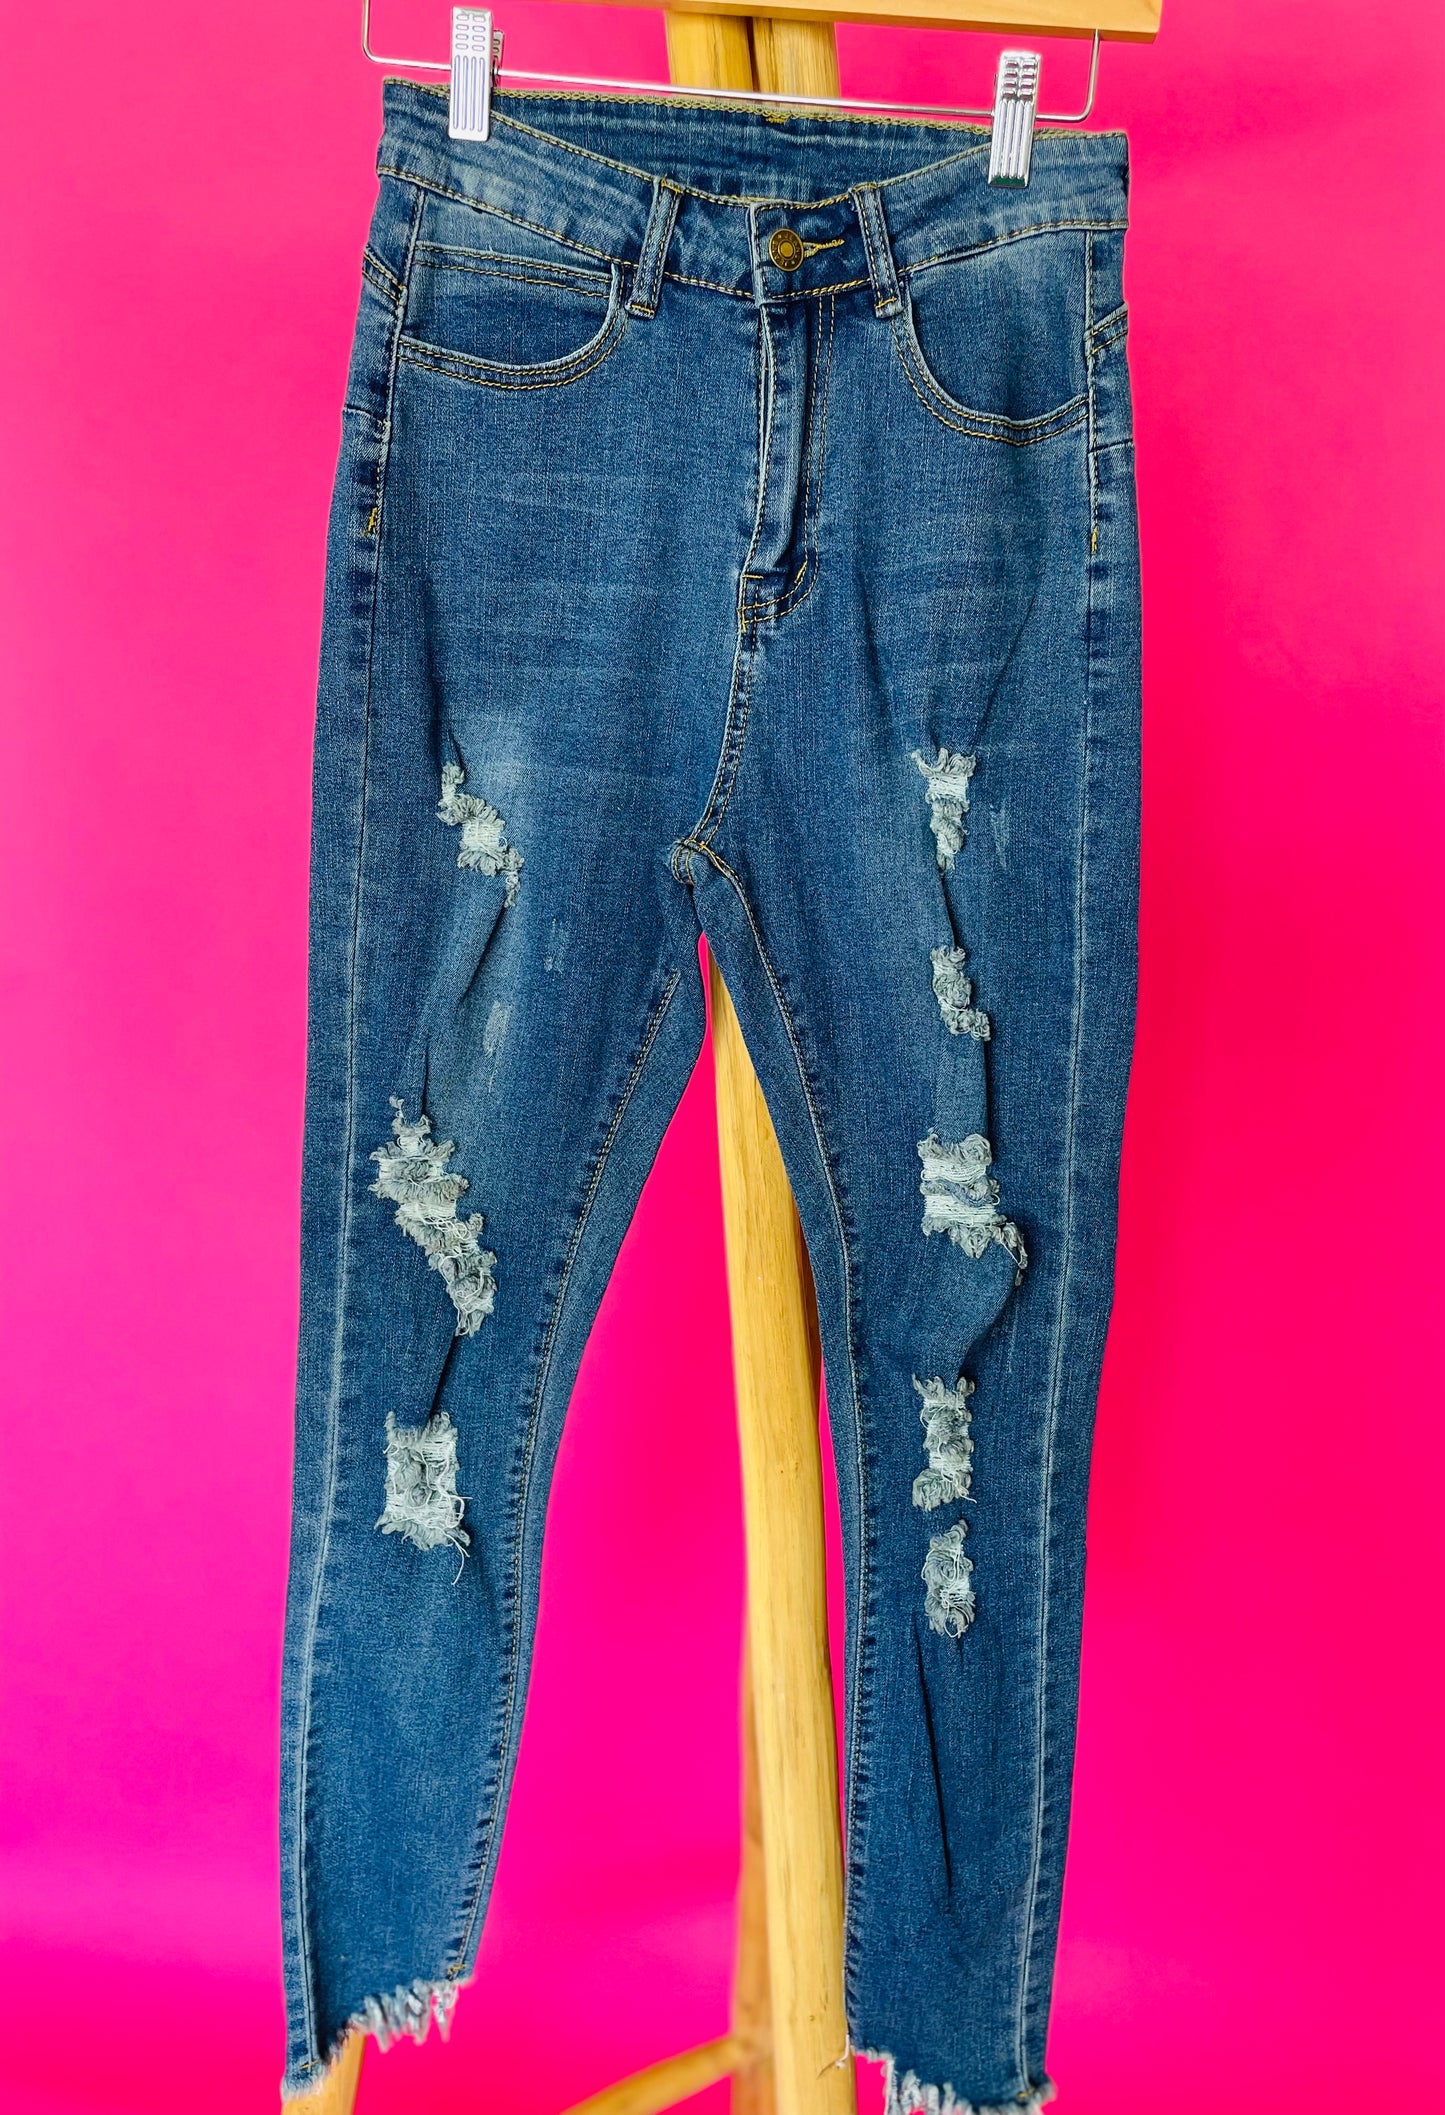 Skinny distressed jeans